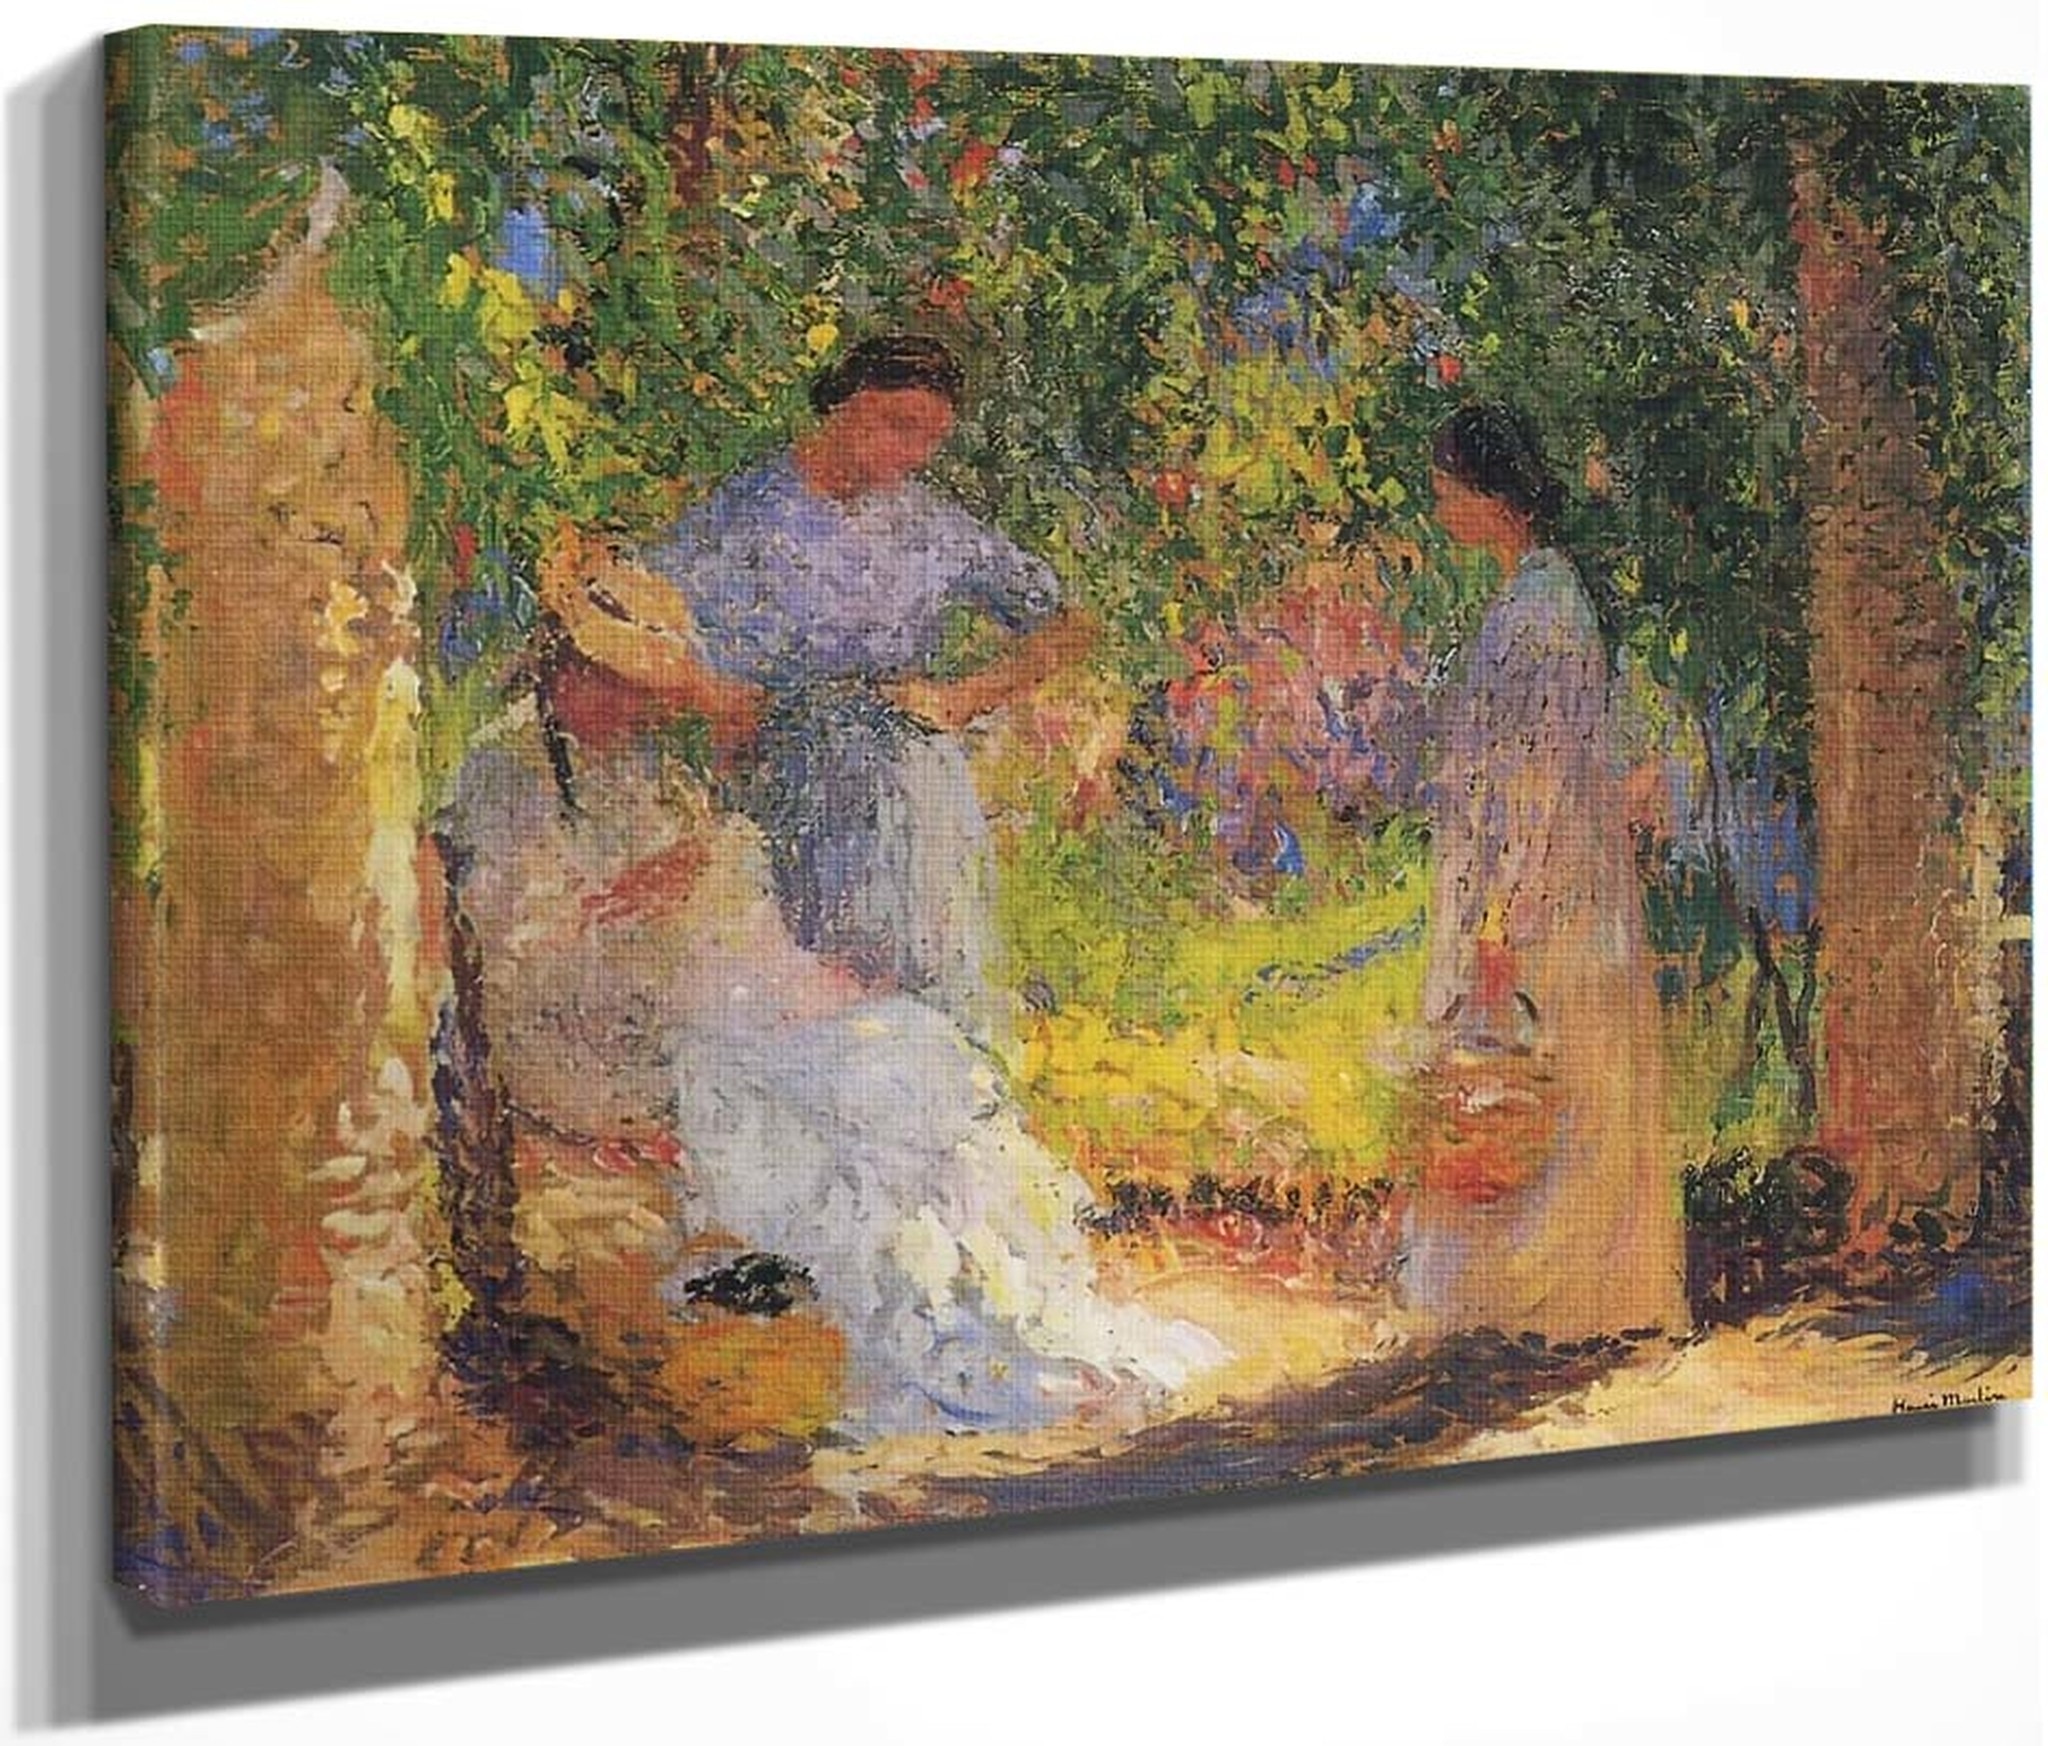 trois femmes dans un jardin henri martin henri martin